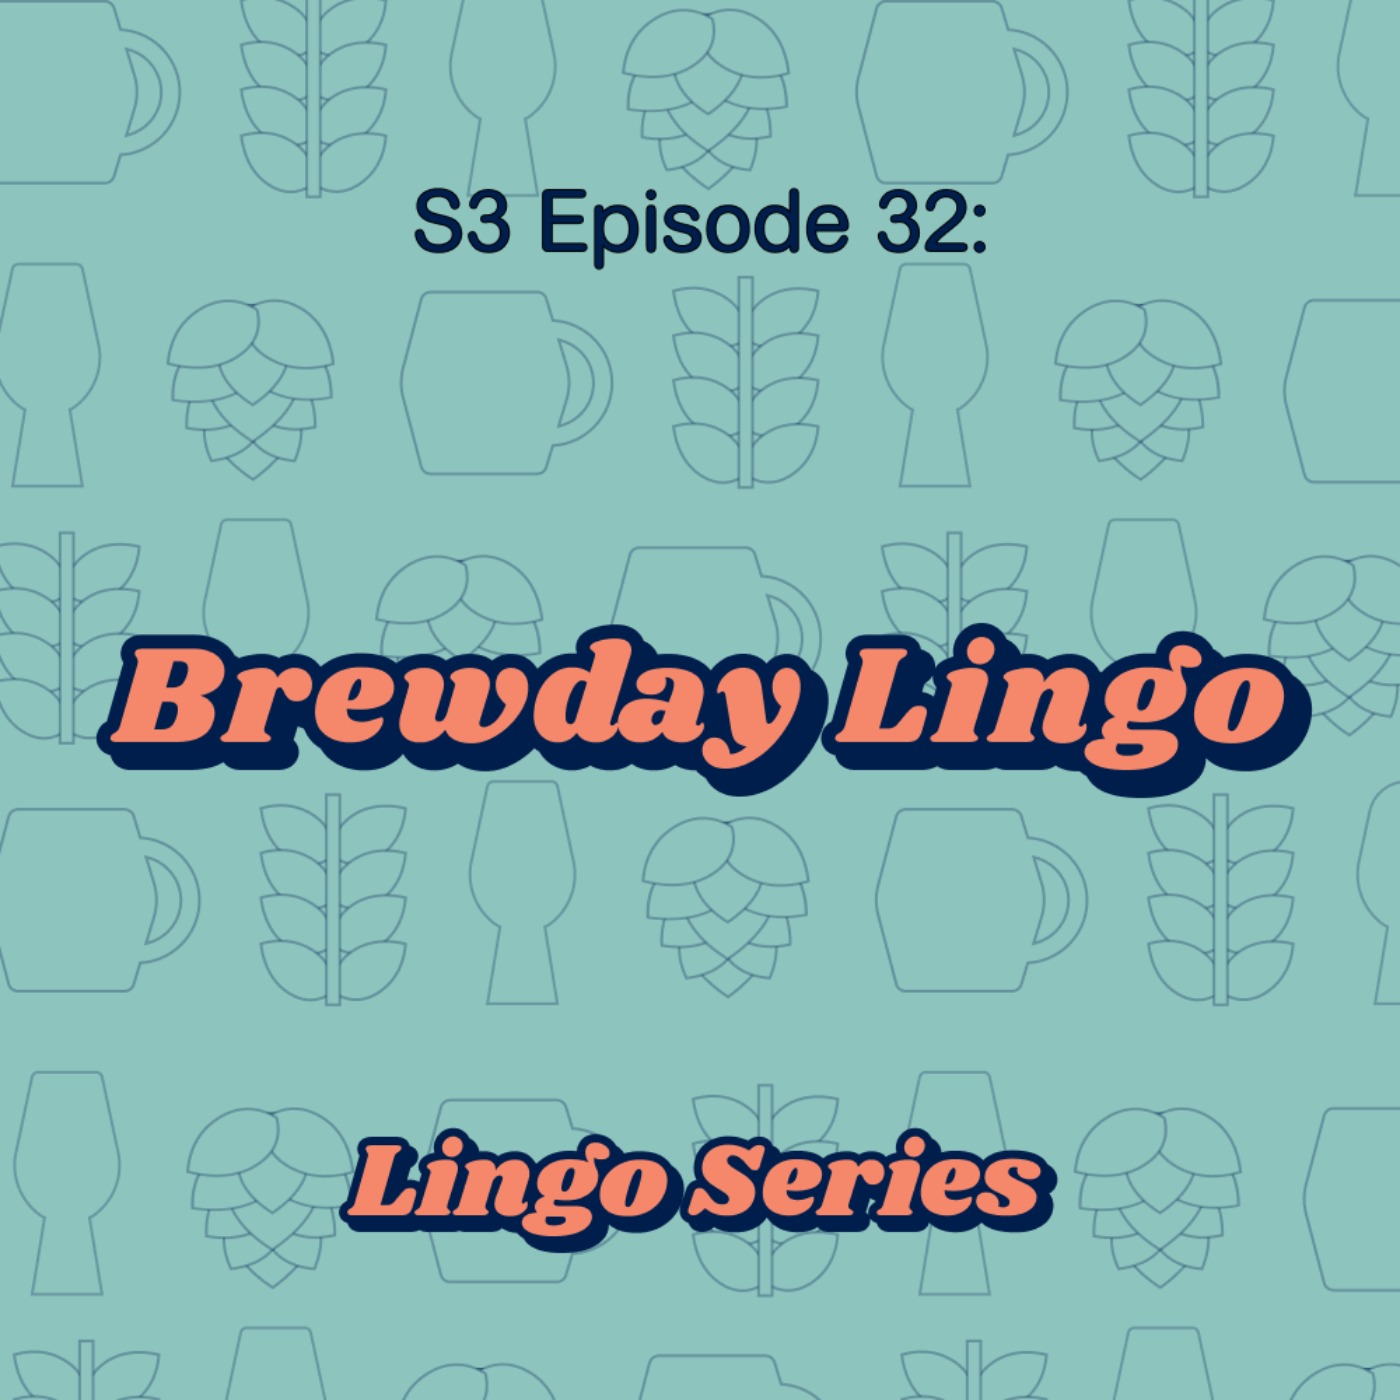 Brewday Lingo - Lingo Series